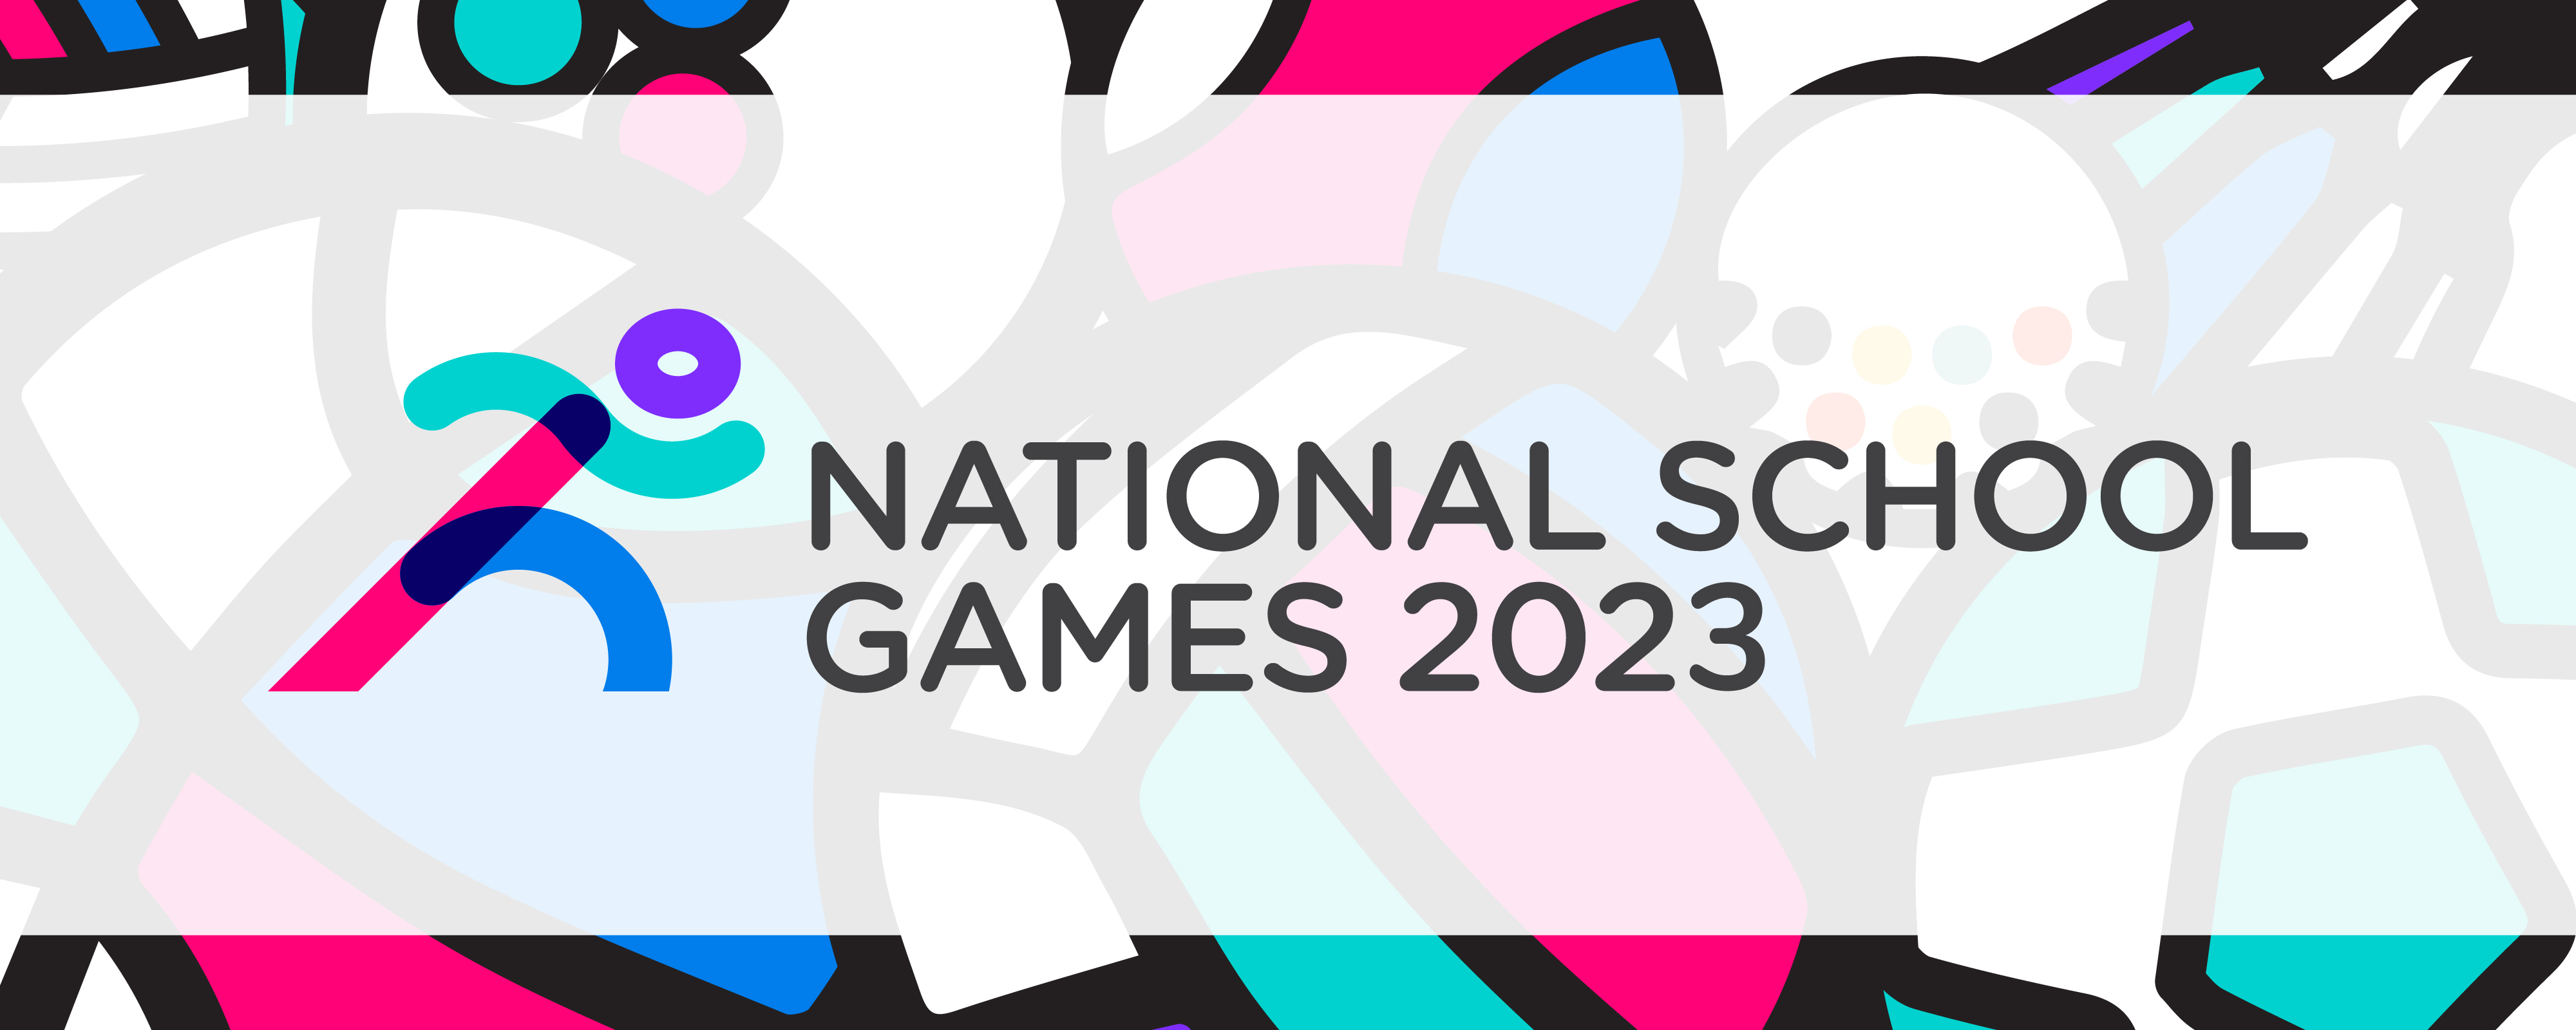 National School Games 2023